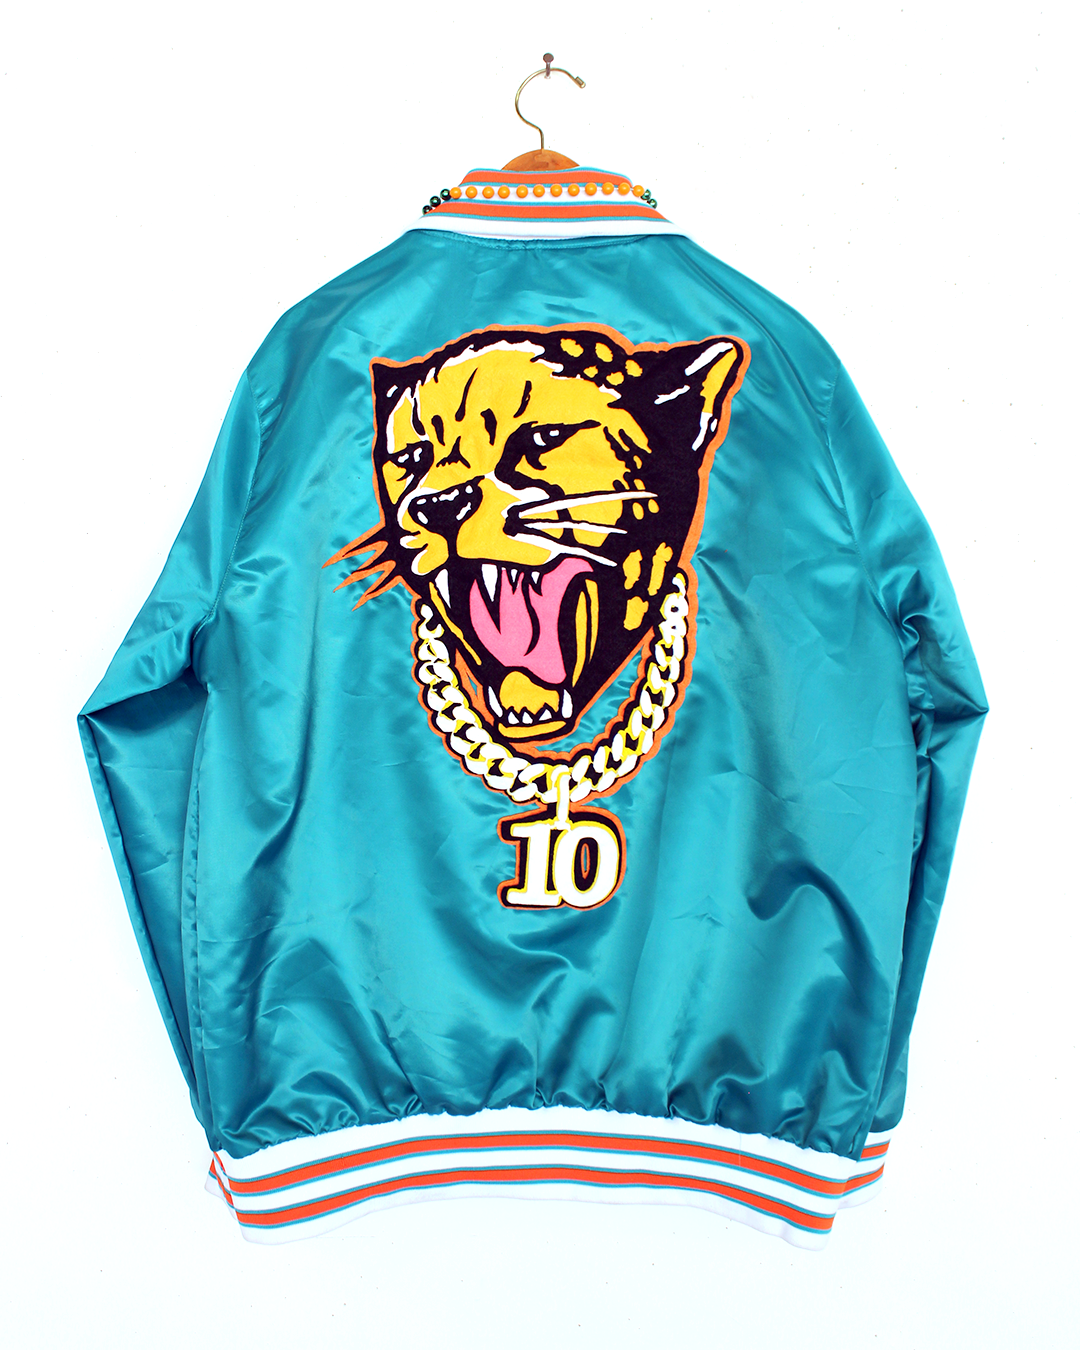 dolphins cheetah jacket 10 2.png